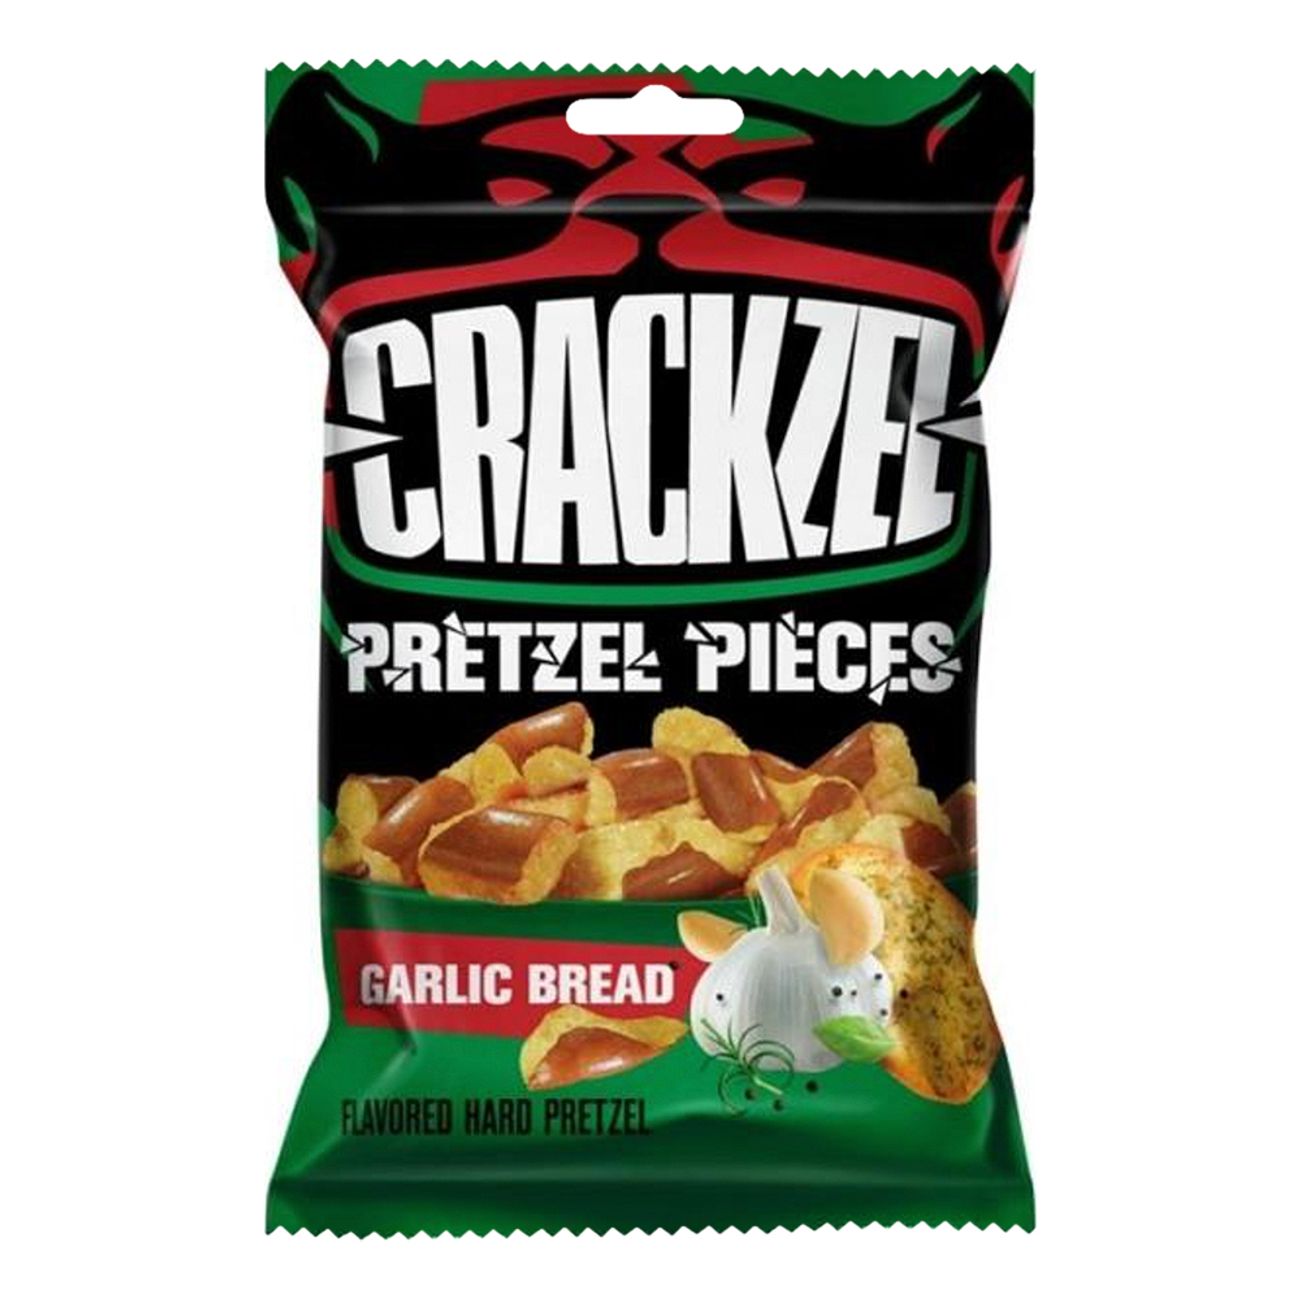 crackzel-pretzel-pieces-garlic-bread-85g-102596-1